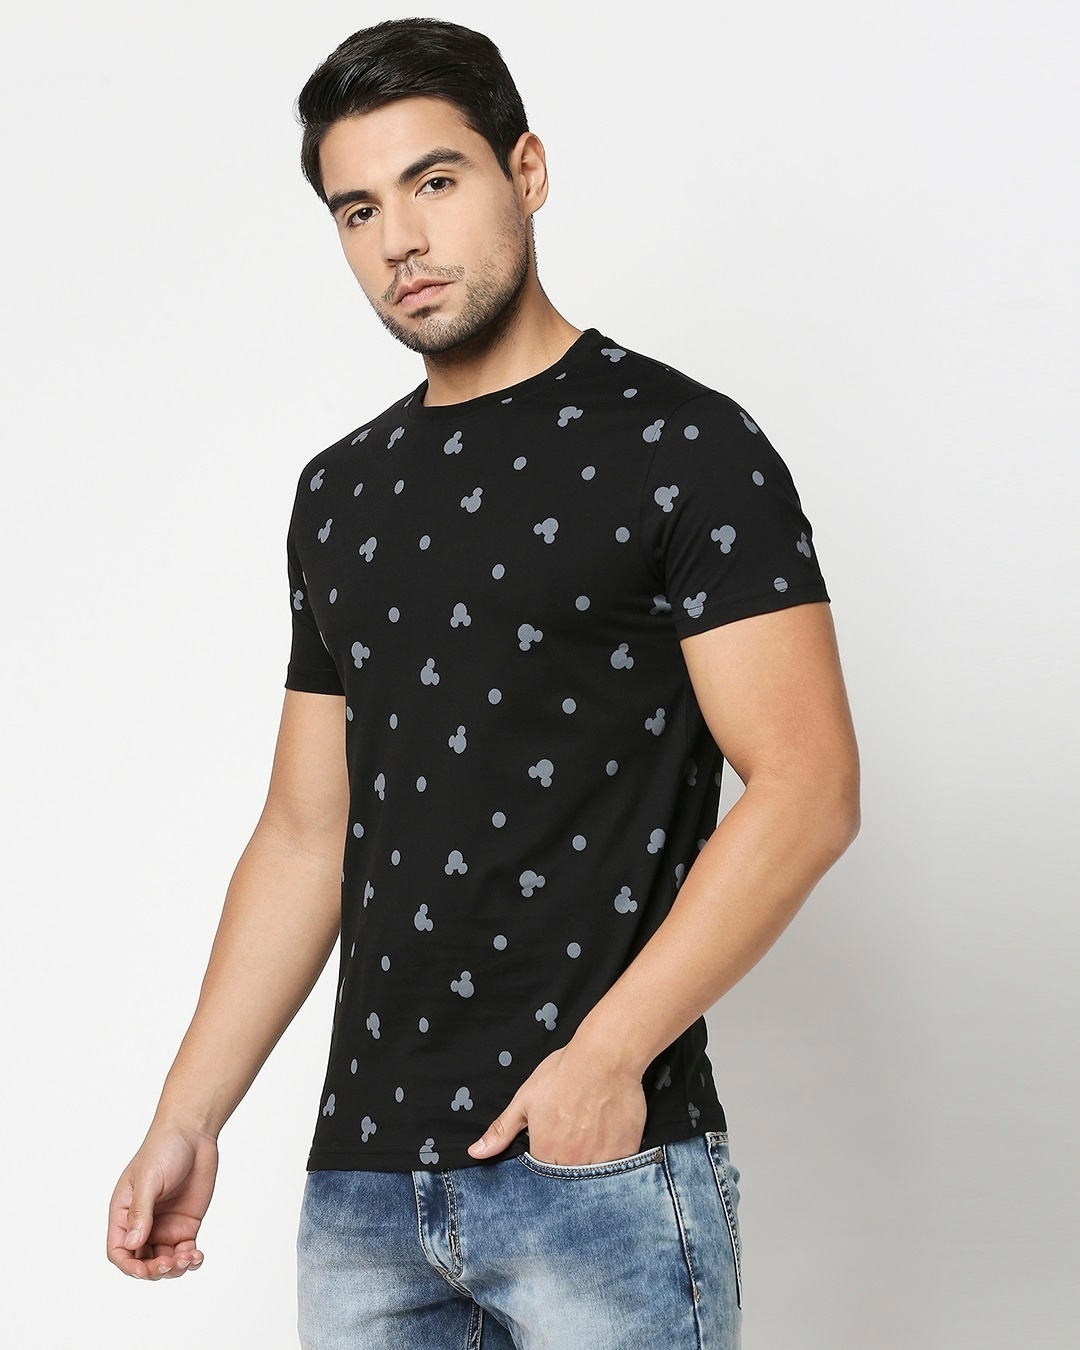 Shop Mickey Silhouette Half Sleeves AOP T-Shirt(DL)-Design